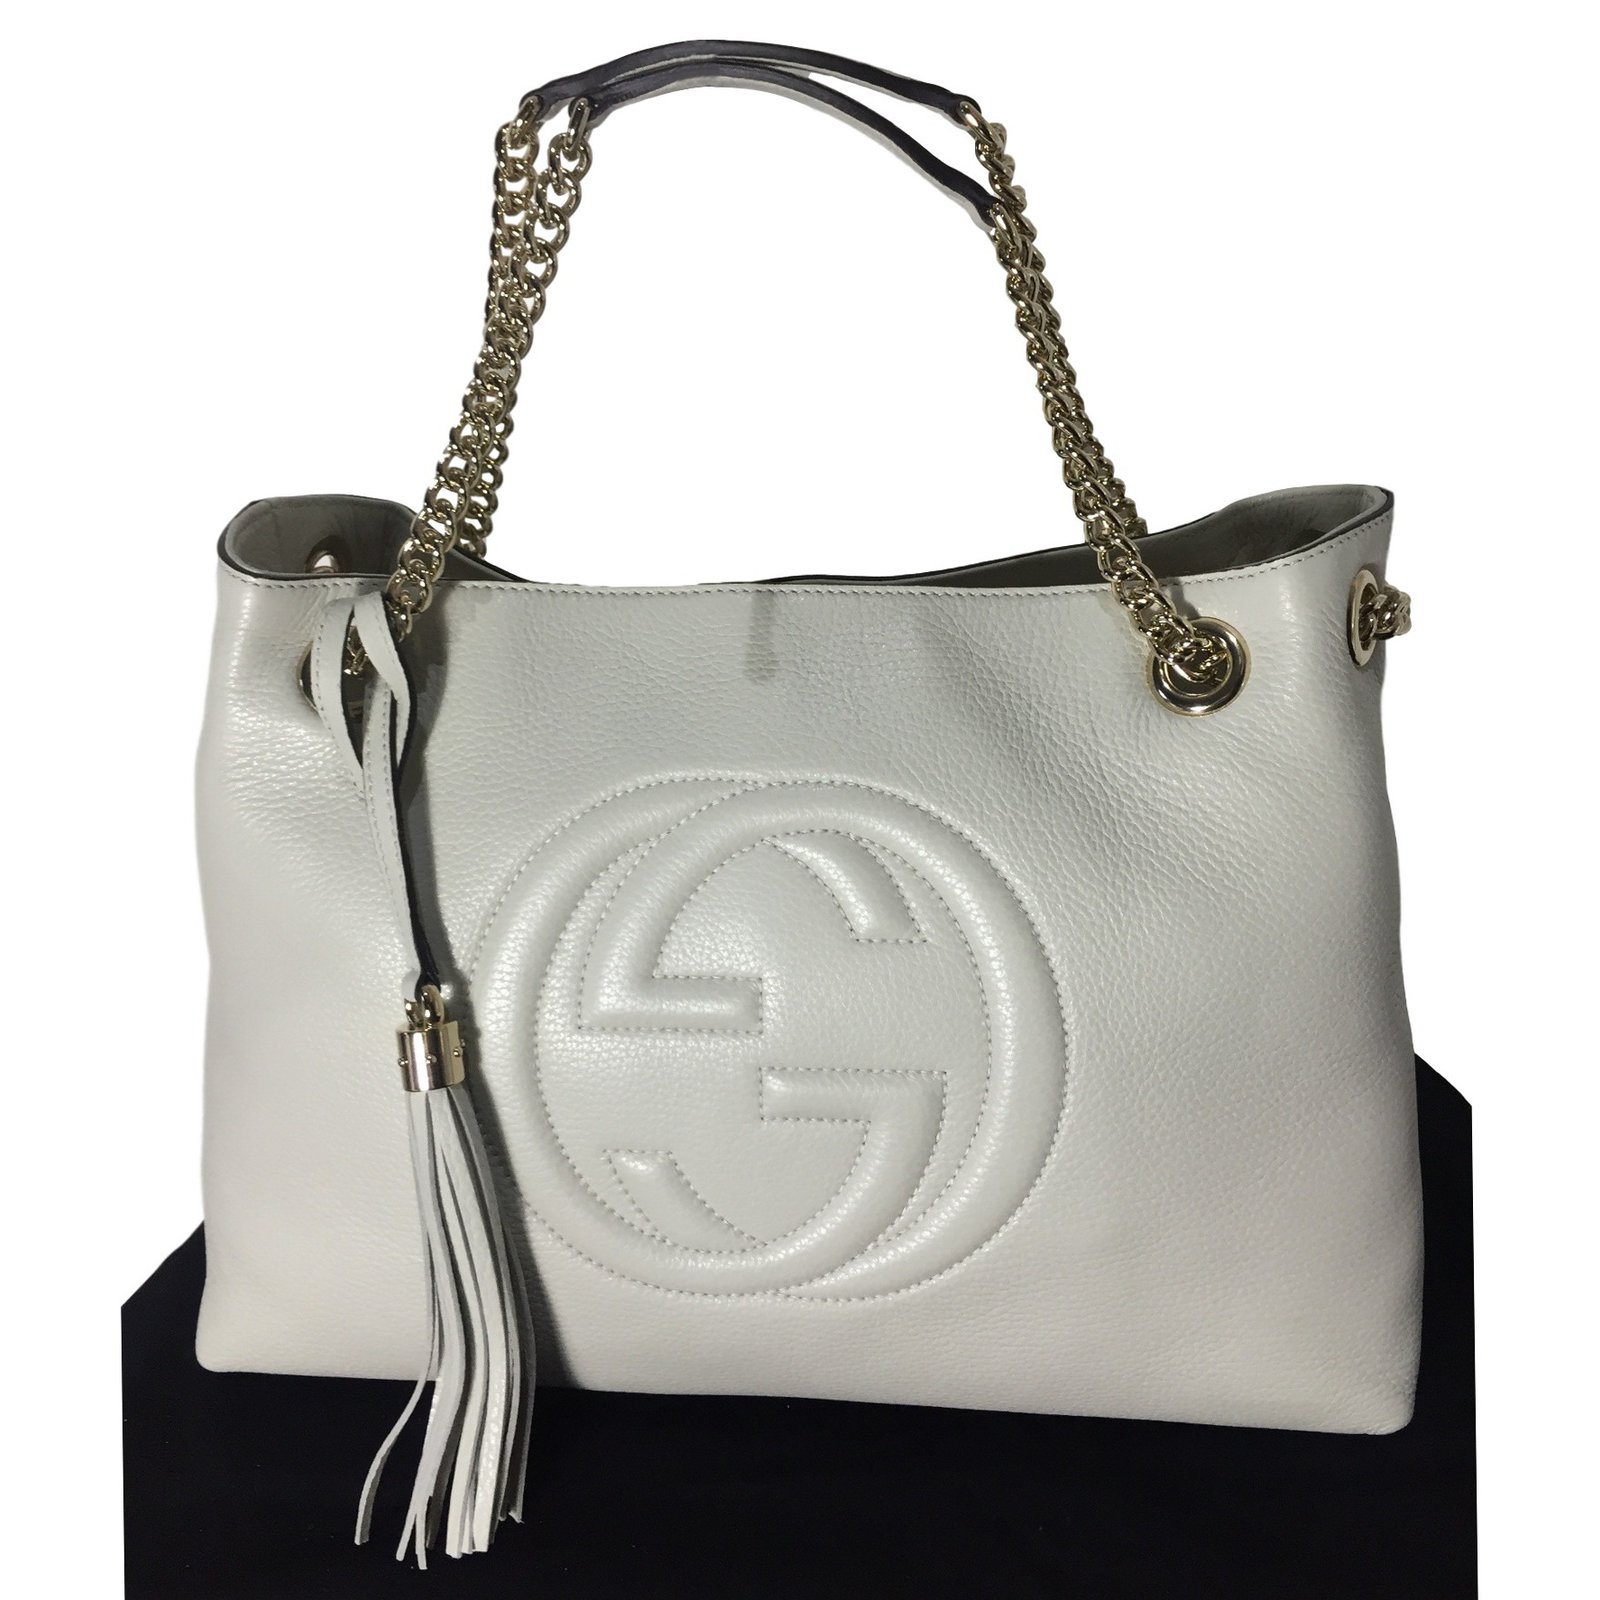 Gucci Soho Gucci chain bag Handbags 